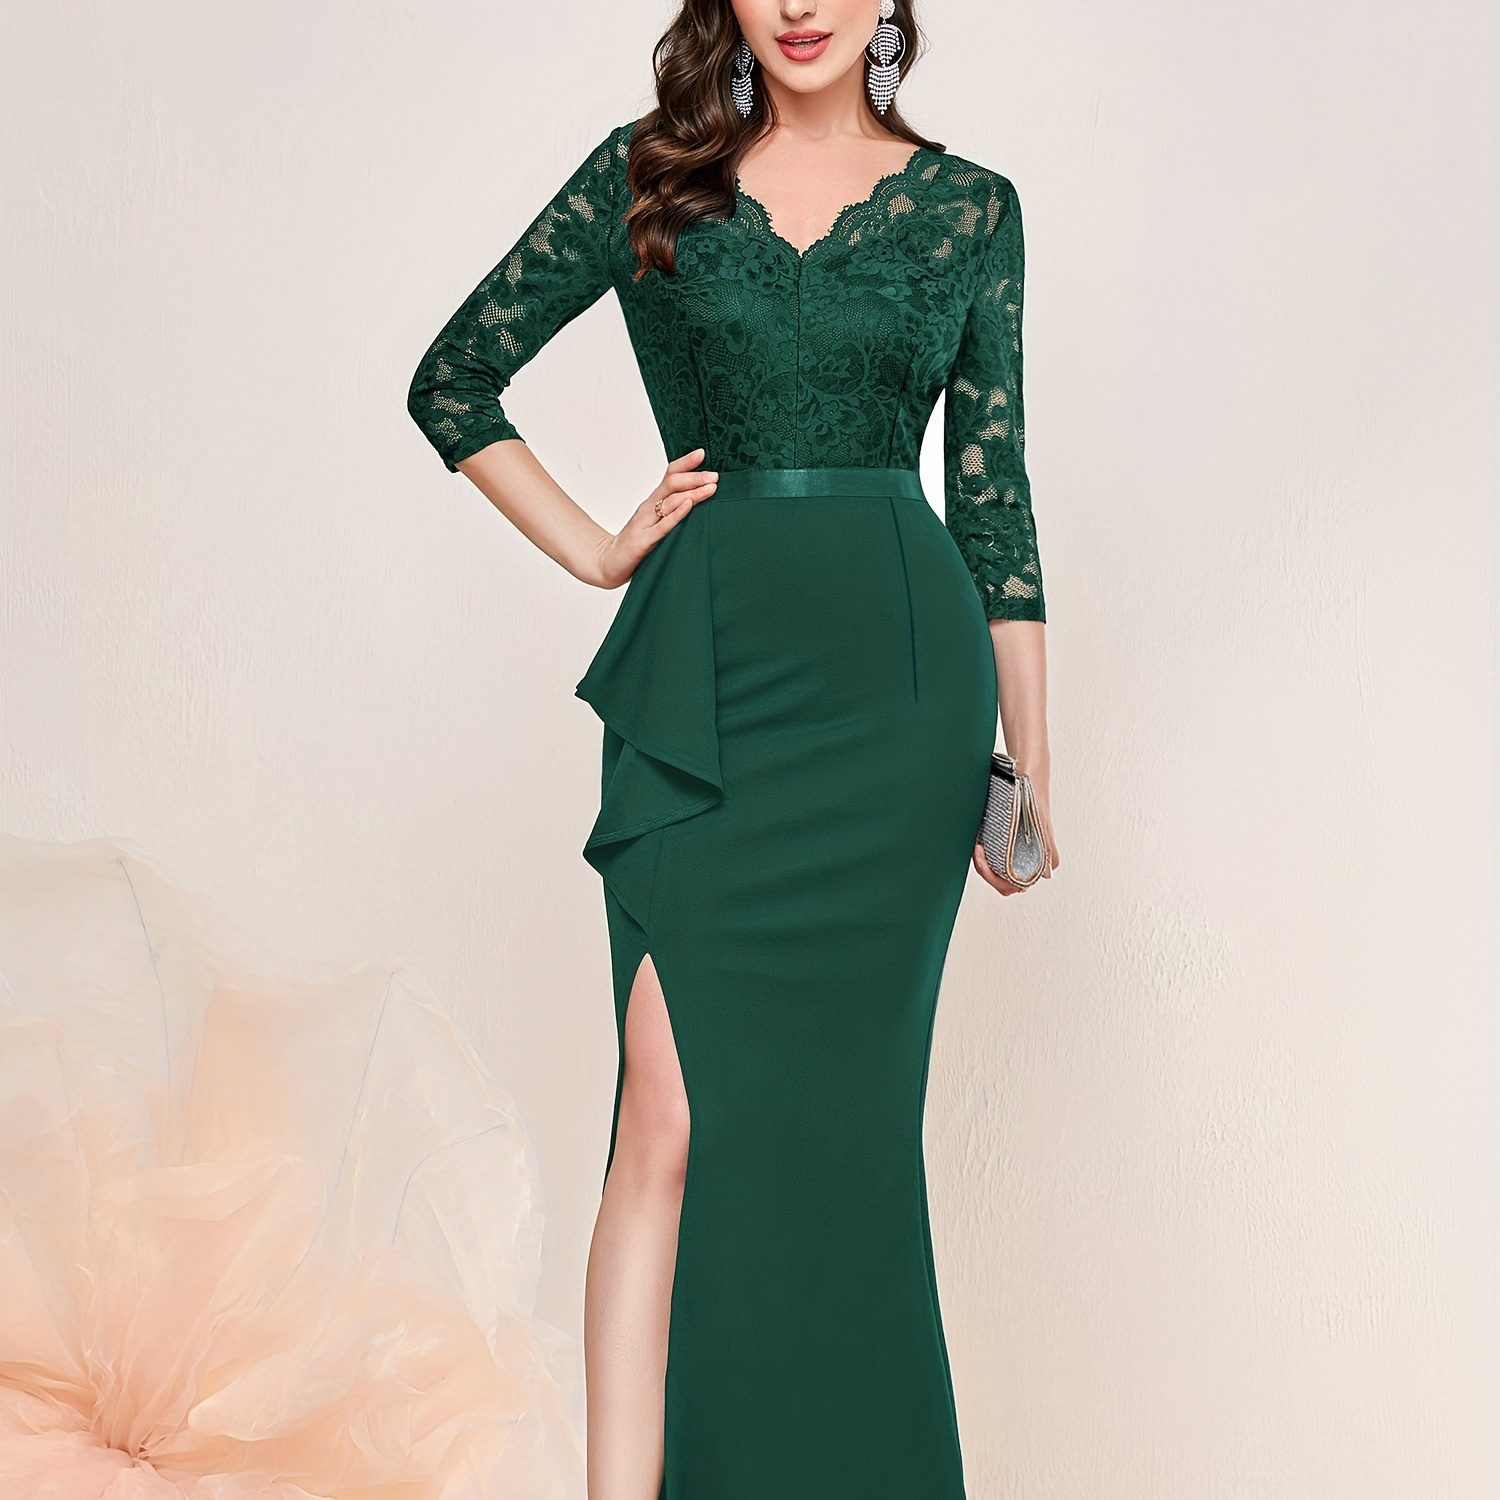 Solid Contrast Lace Dress, Elegant V Neck Sleeve Party A Line Dress ...